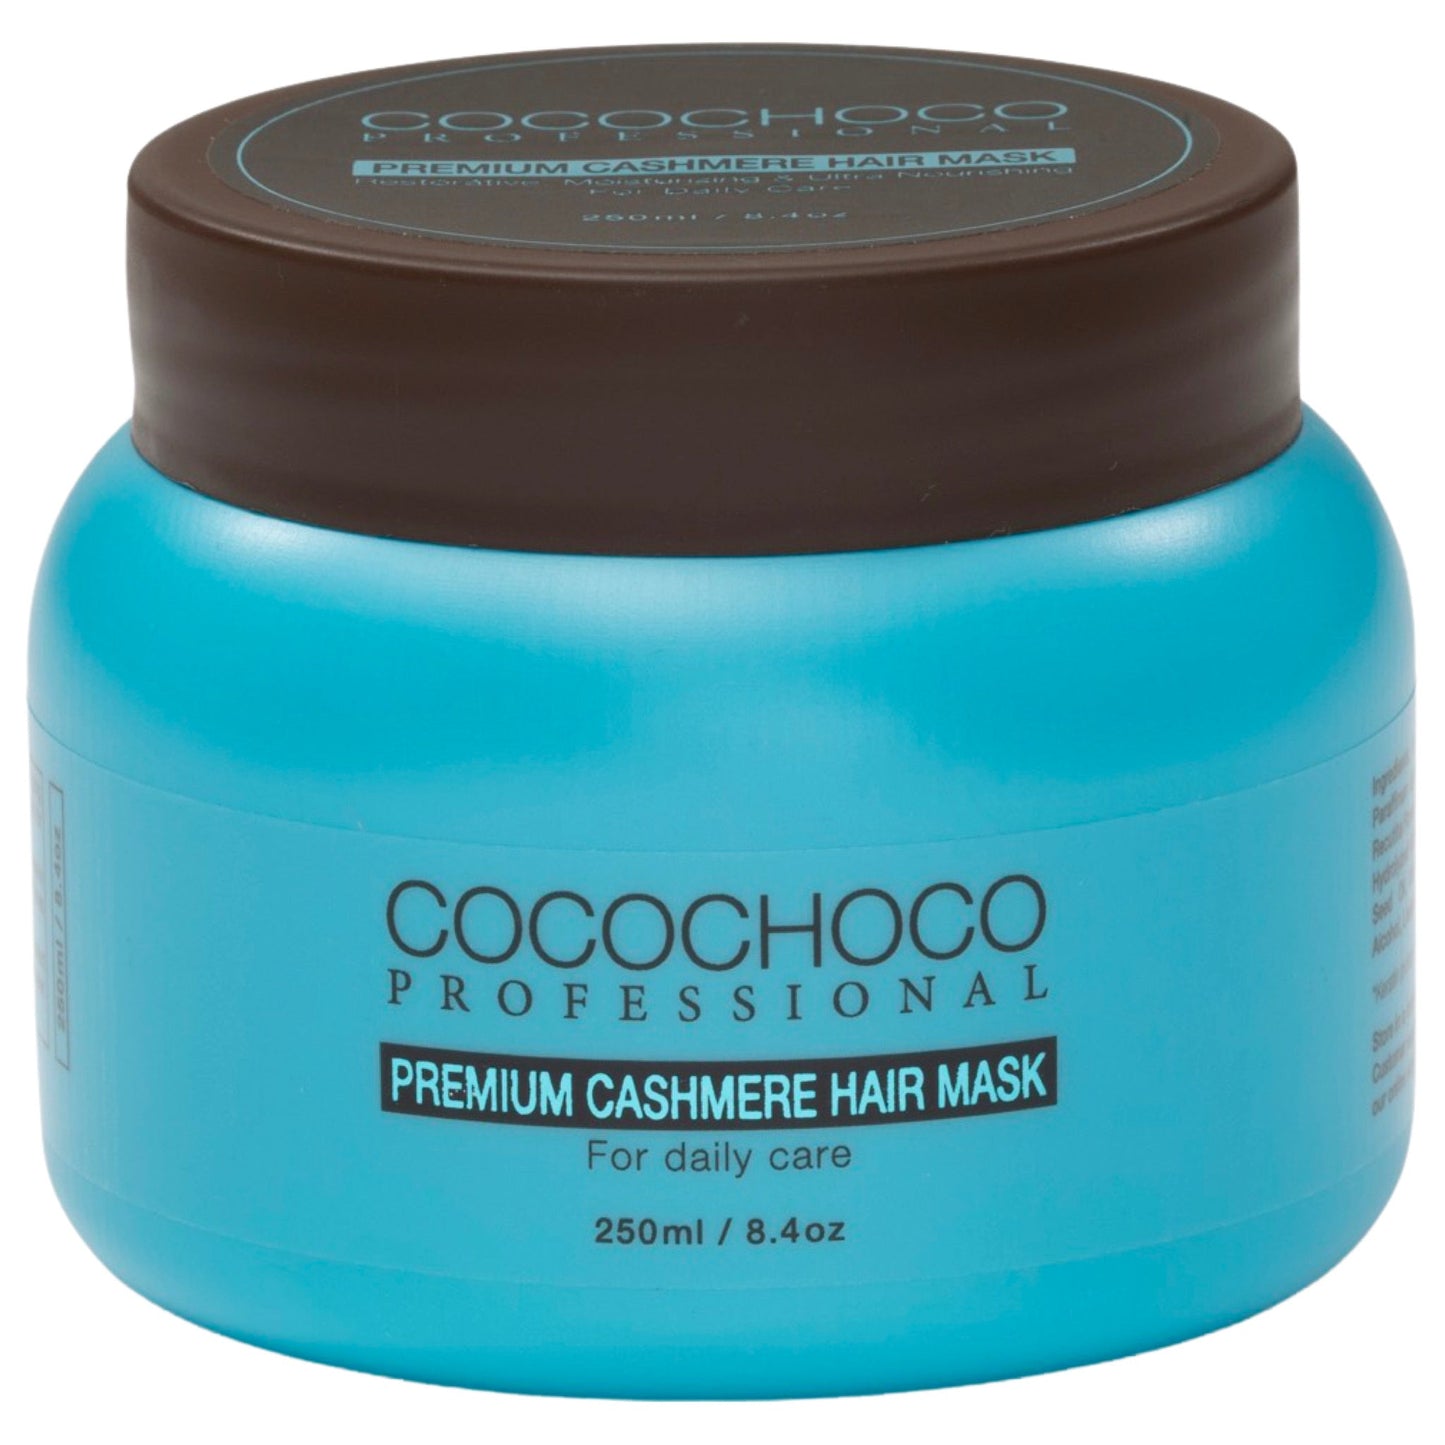 COCOCHOCO Kaschmirmaske 250 ml - Regeneriert trockene oder beschädigte Haare